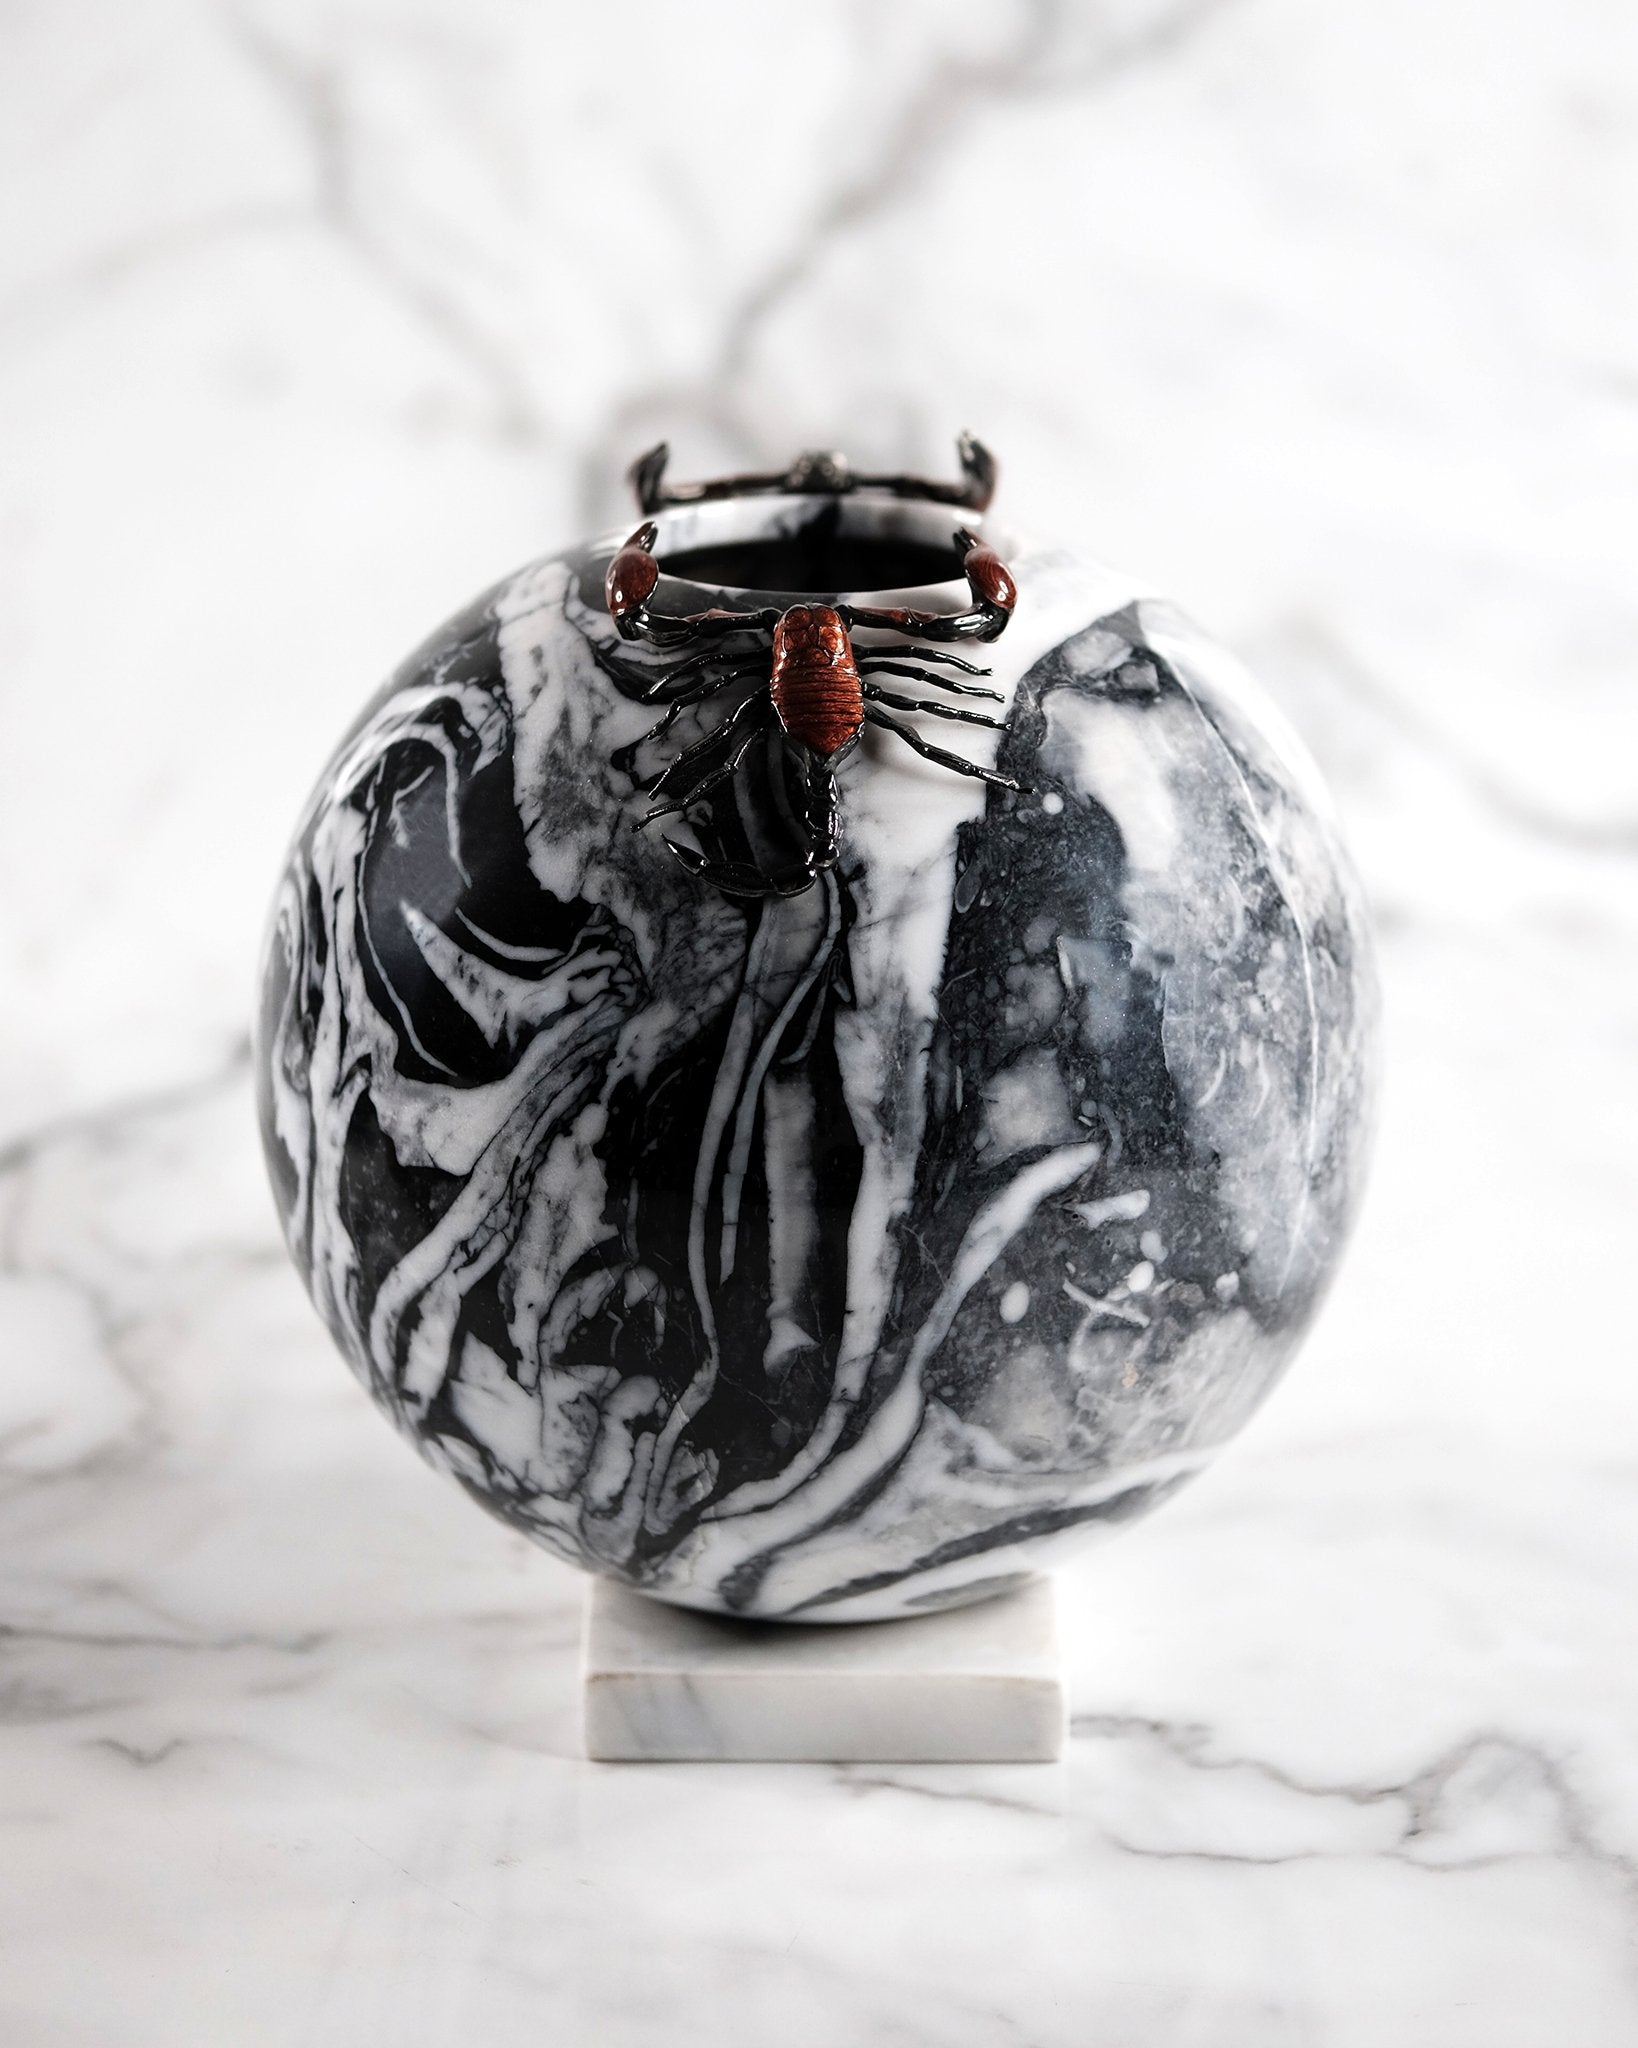 Mottled Black & White Turned Marble Vase, with Two Enameled Scorpions